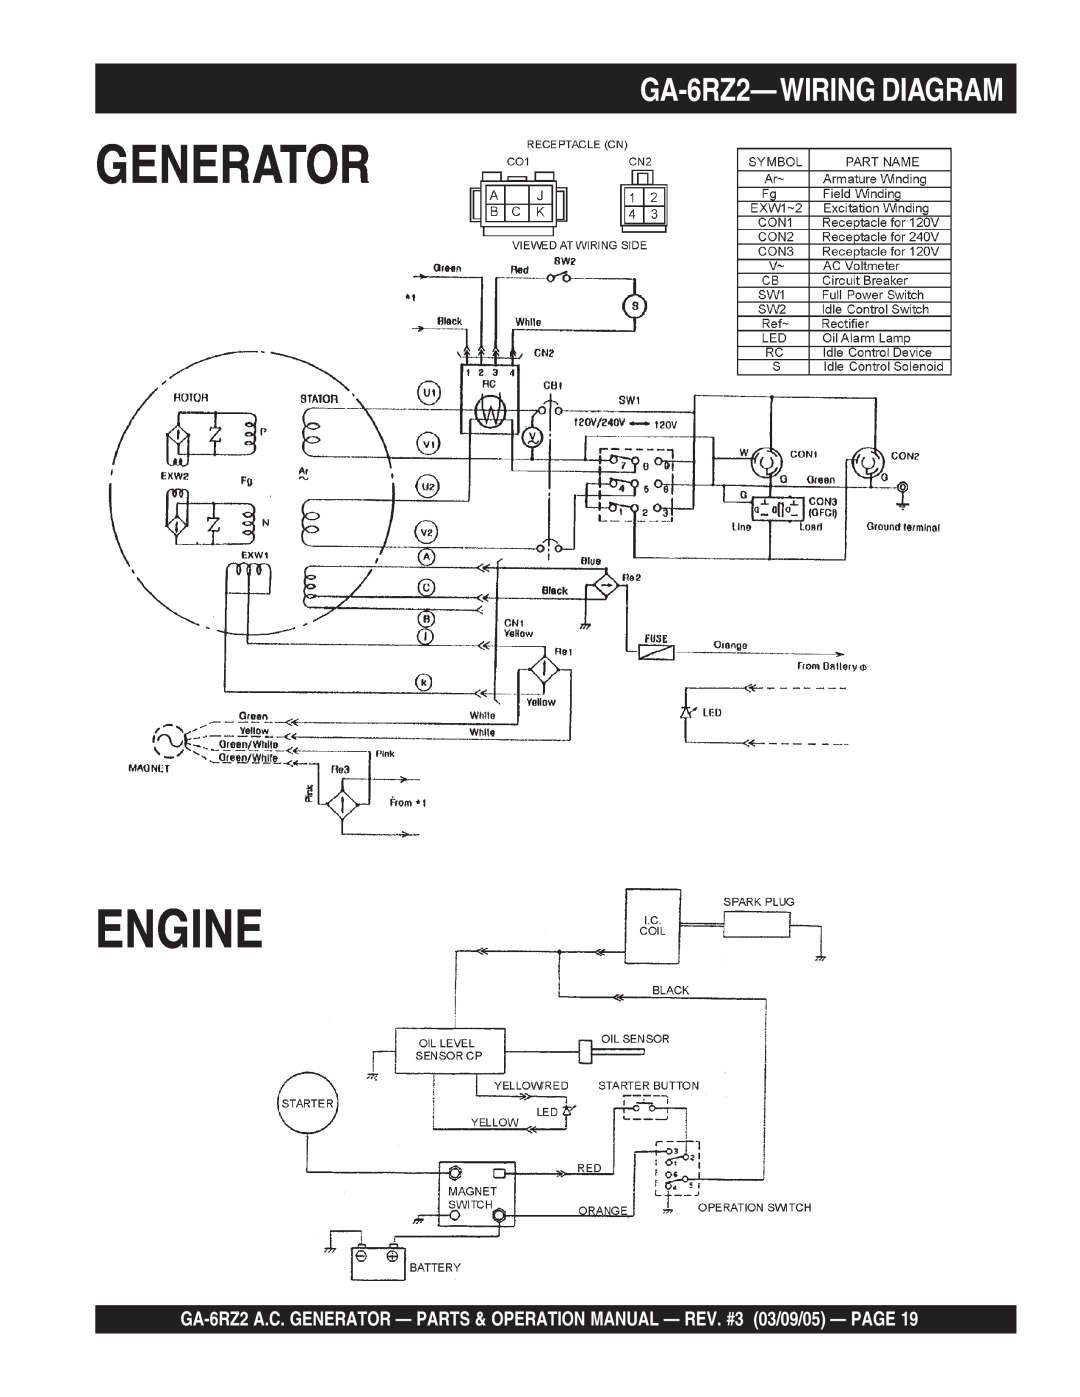 Multiquip operation manual Generator Engine, GA-6RZ2-WIRINGDIAGRAM 